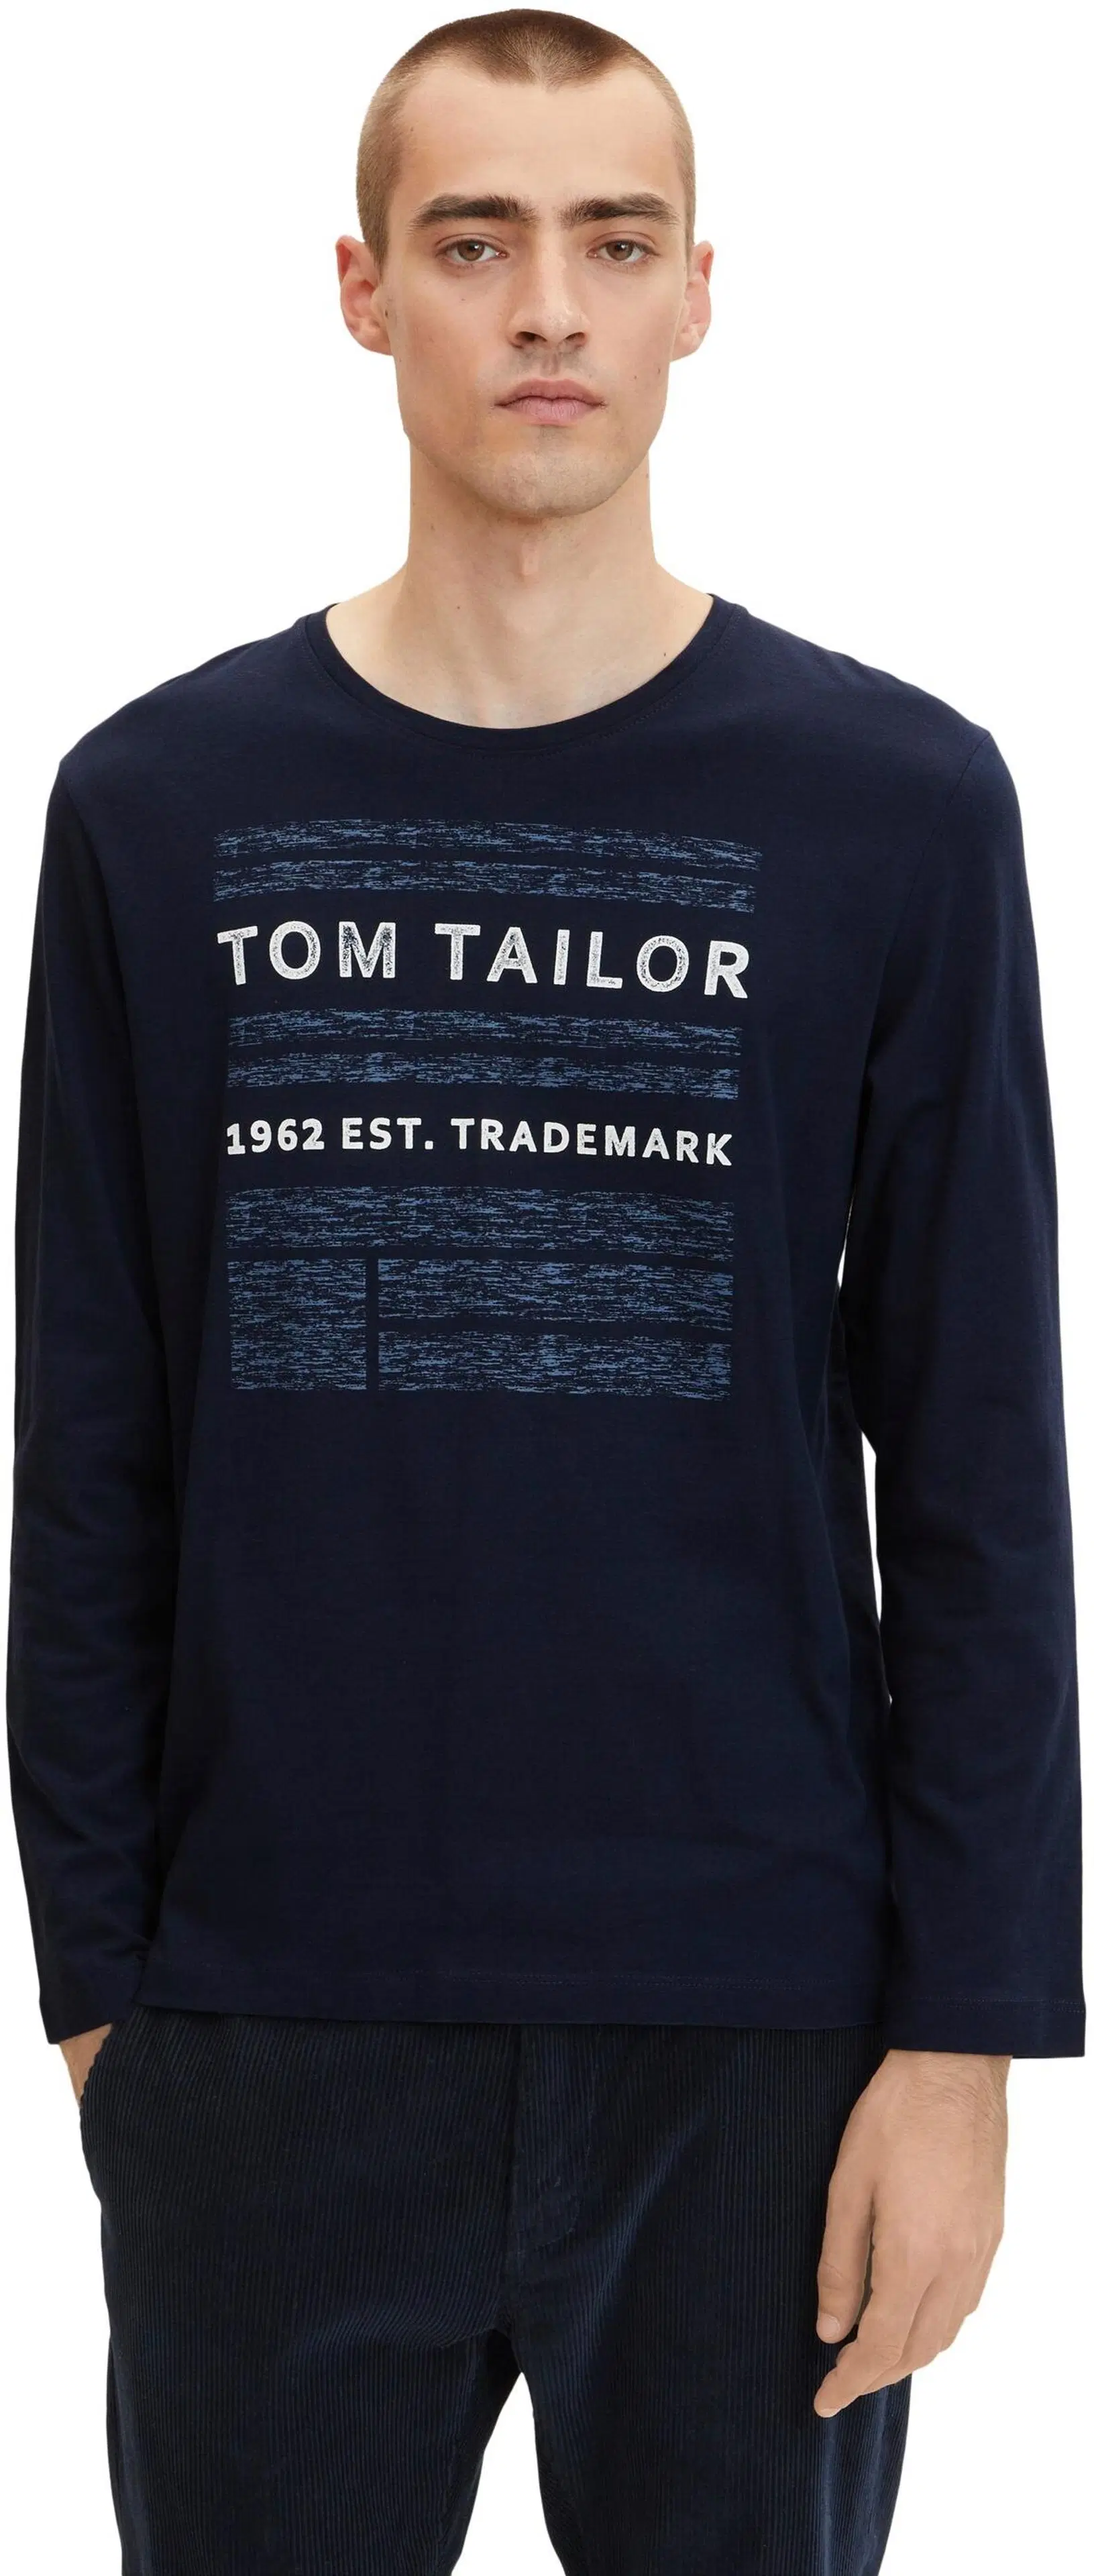 Tom Tailor trikoopaita